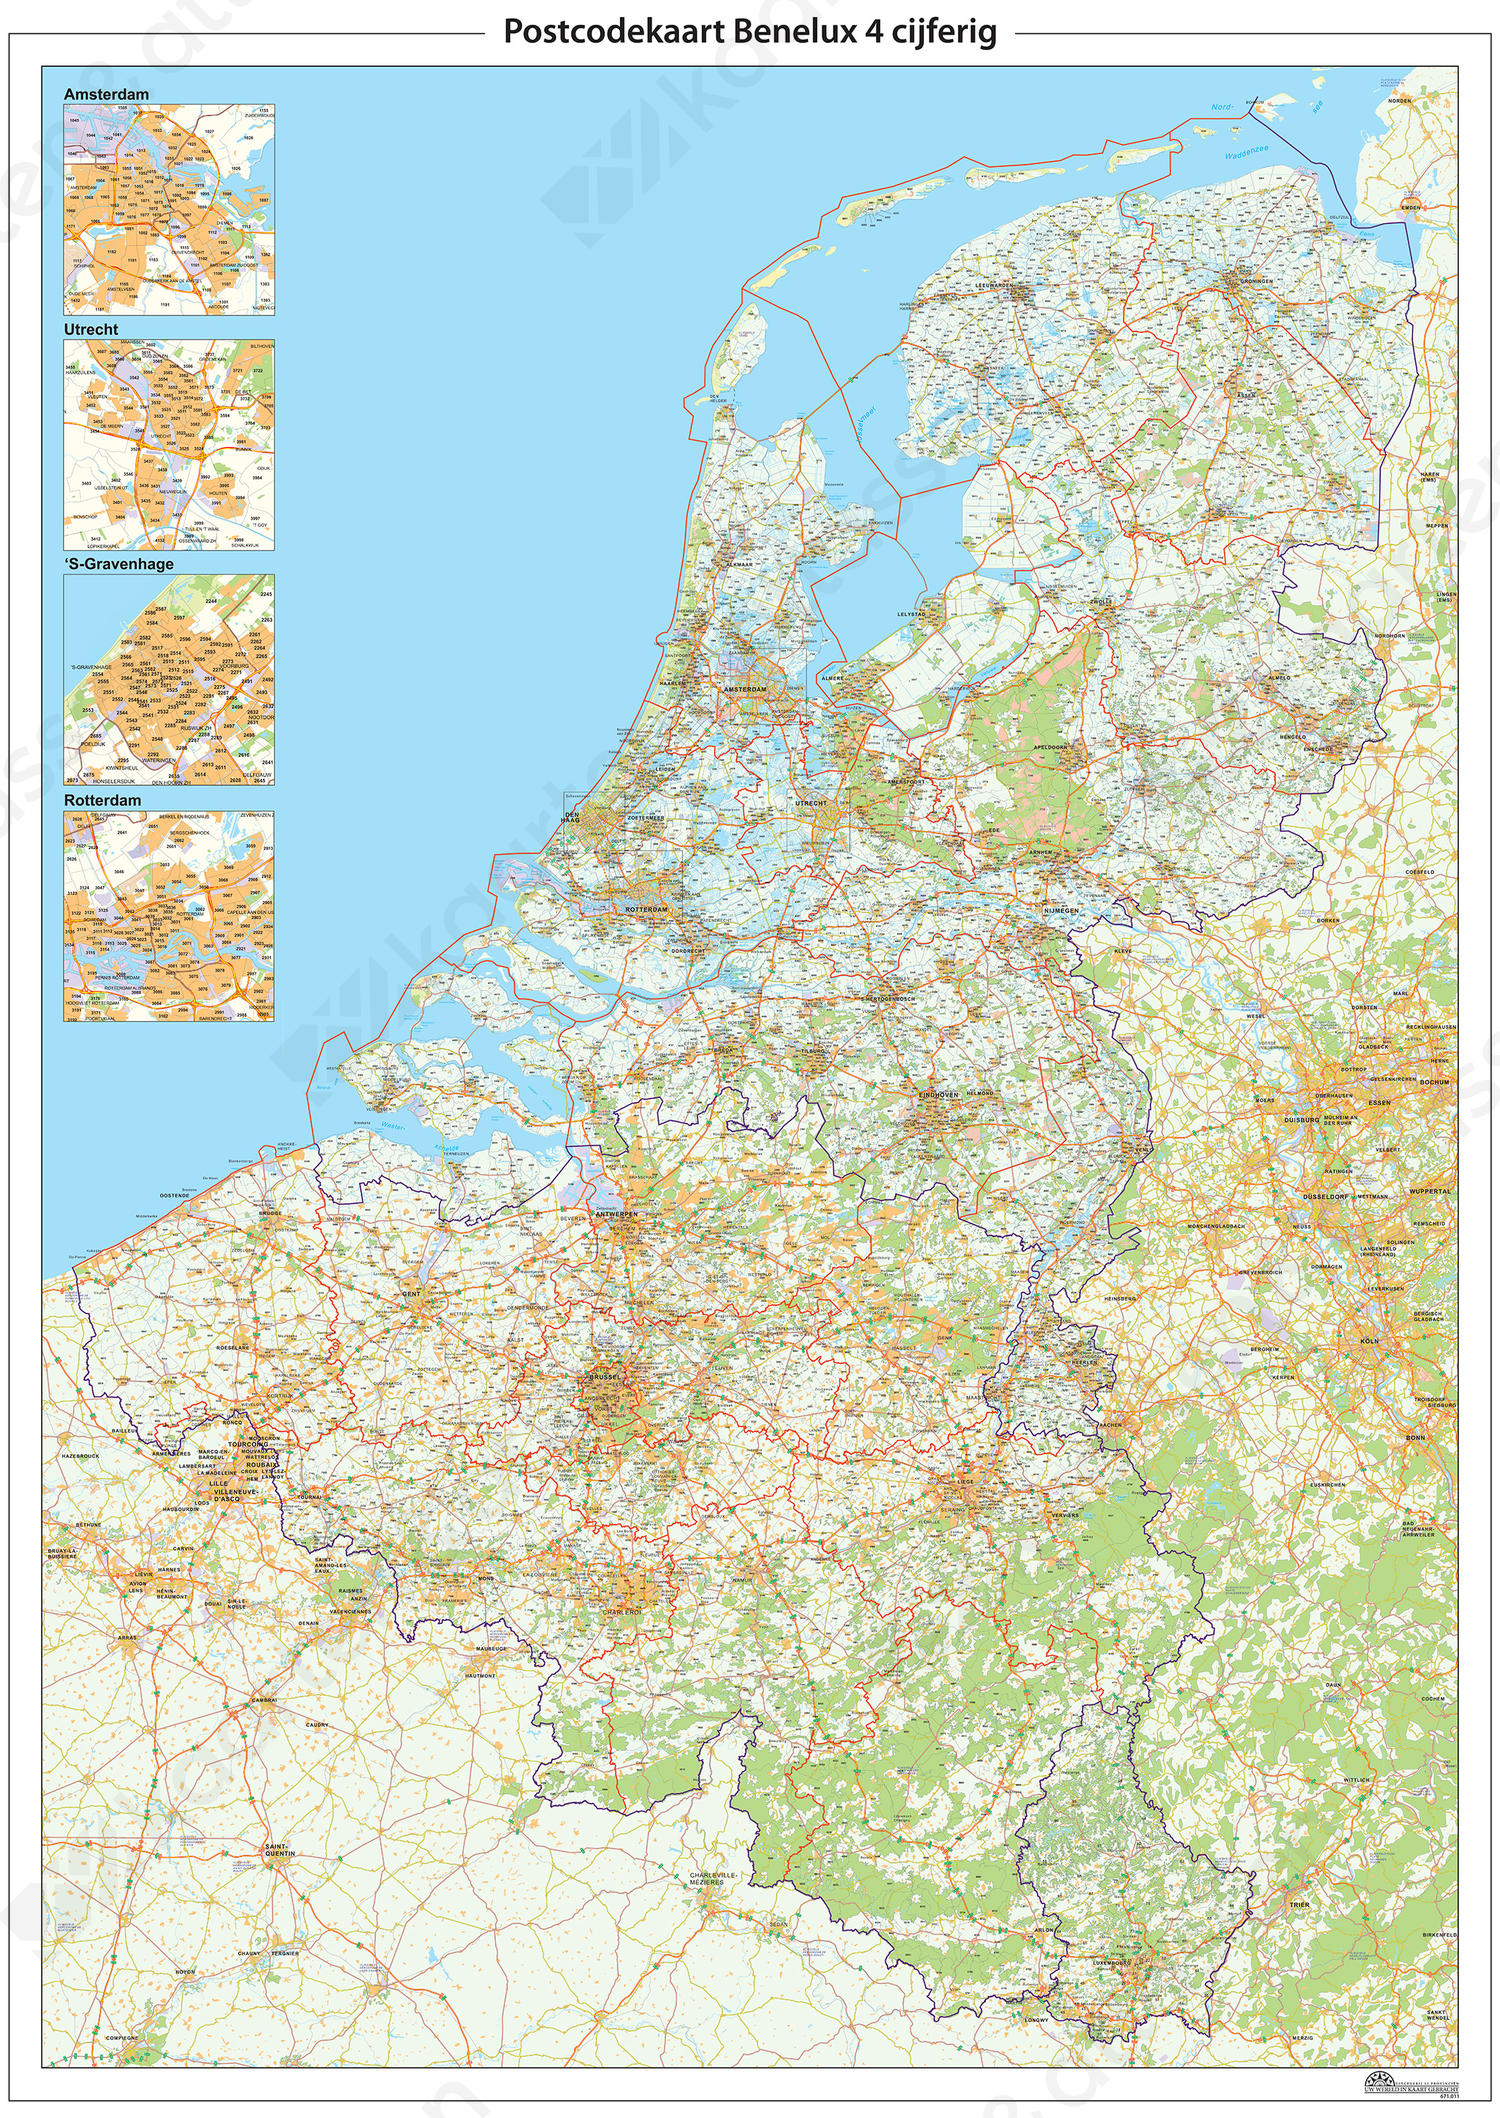 Digitale Postcodekaart Benelux 4-cijferig